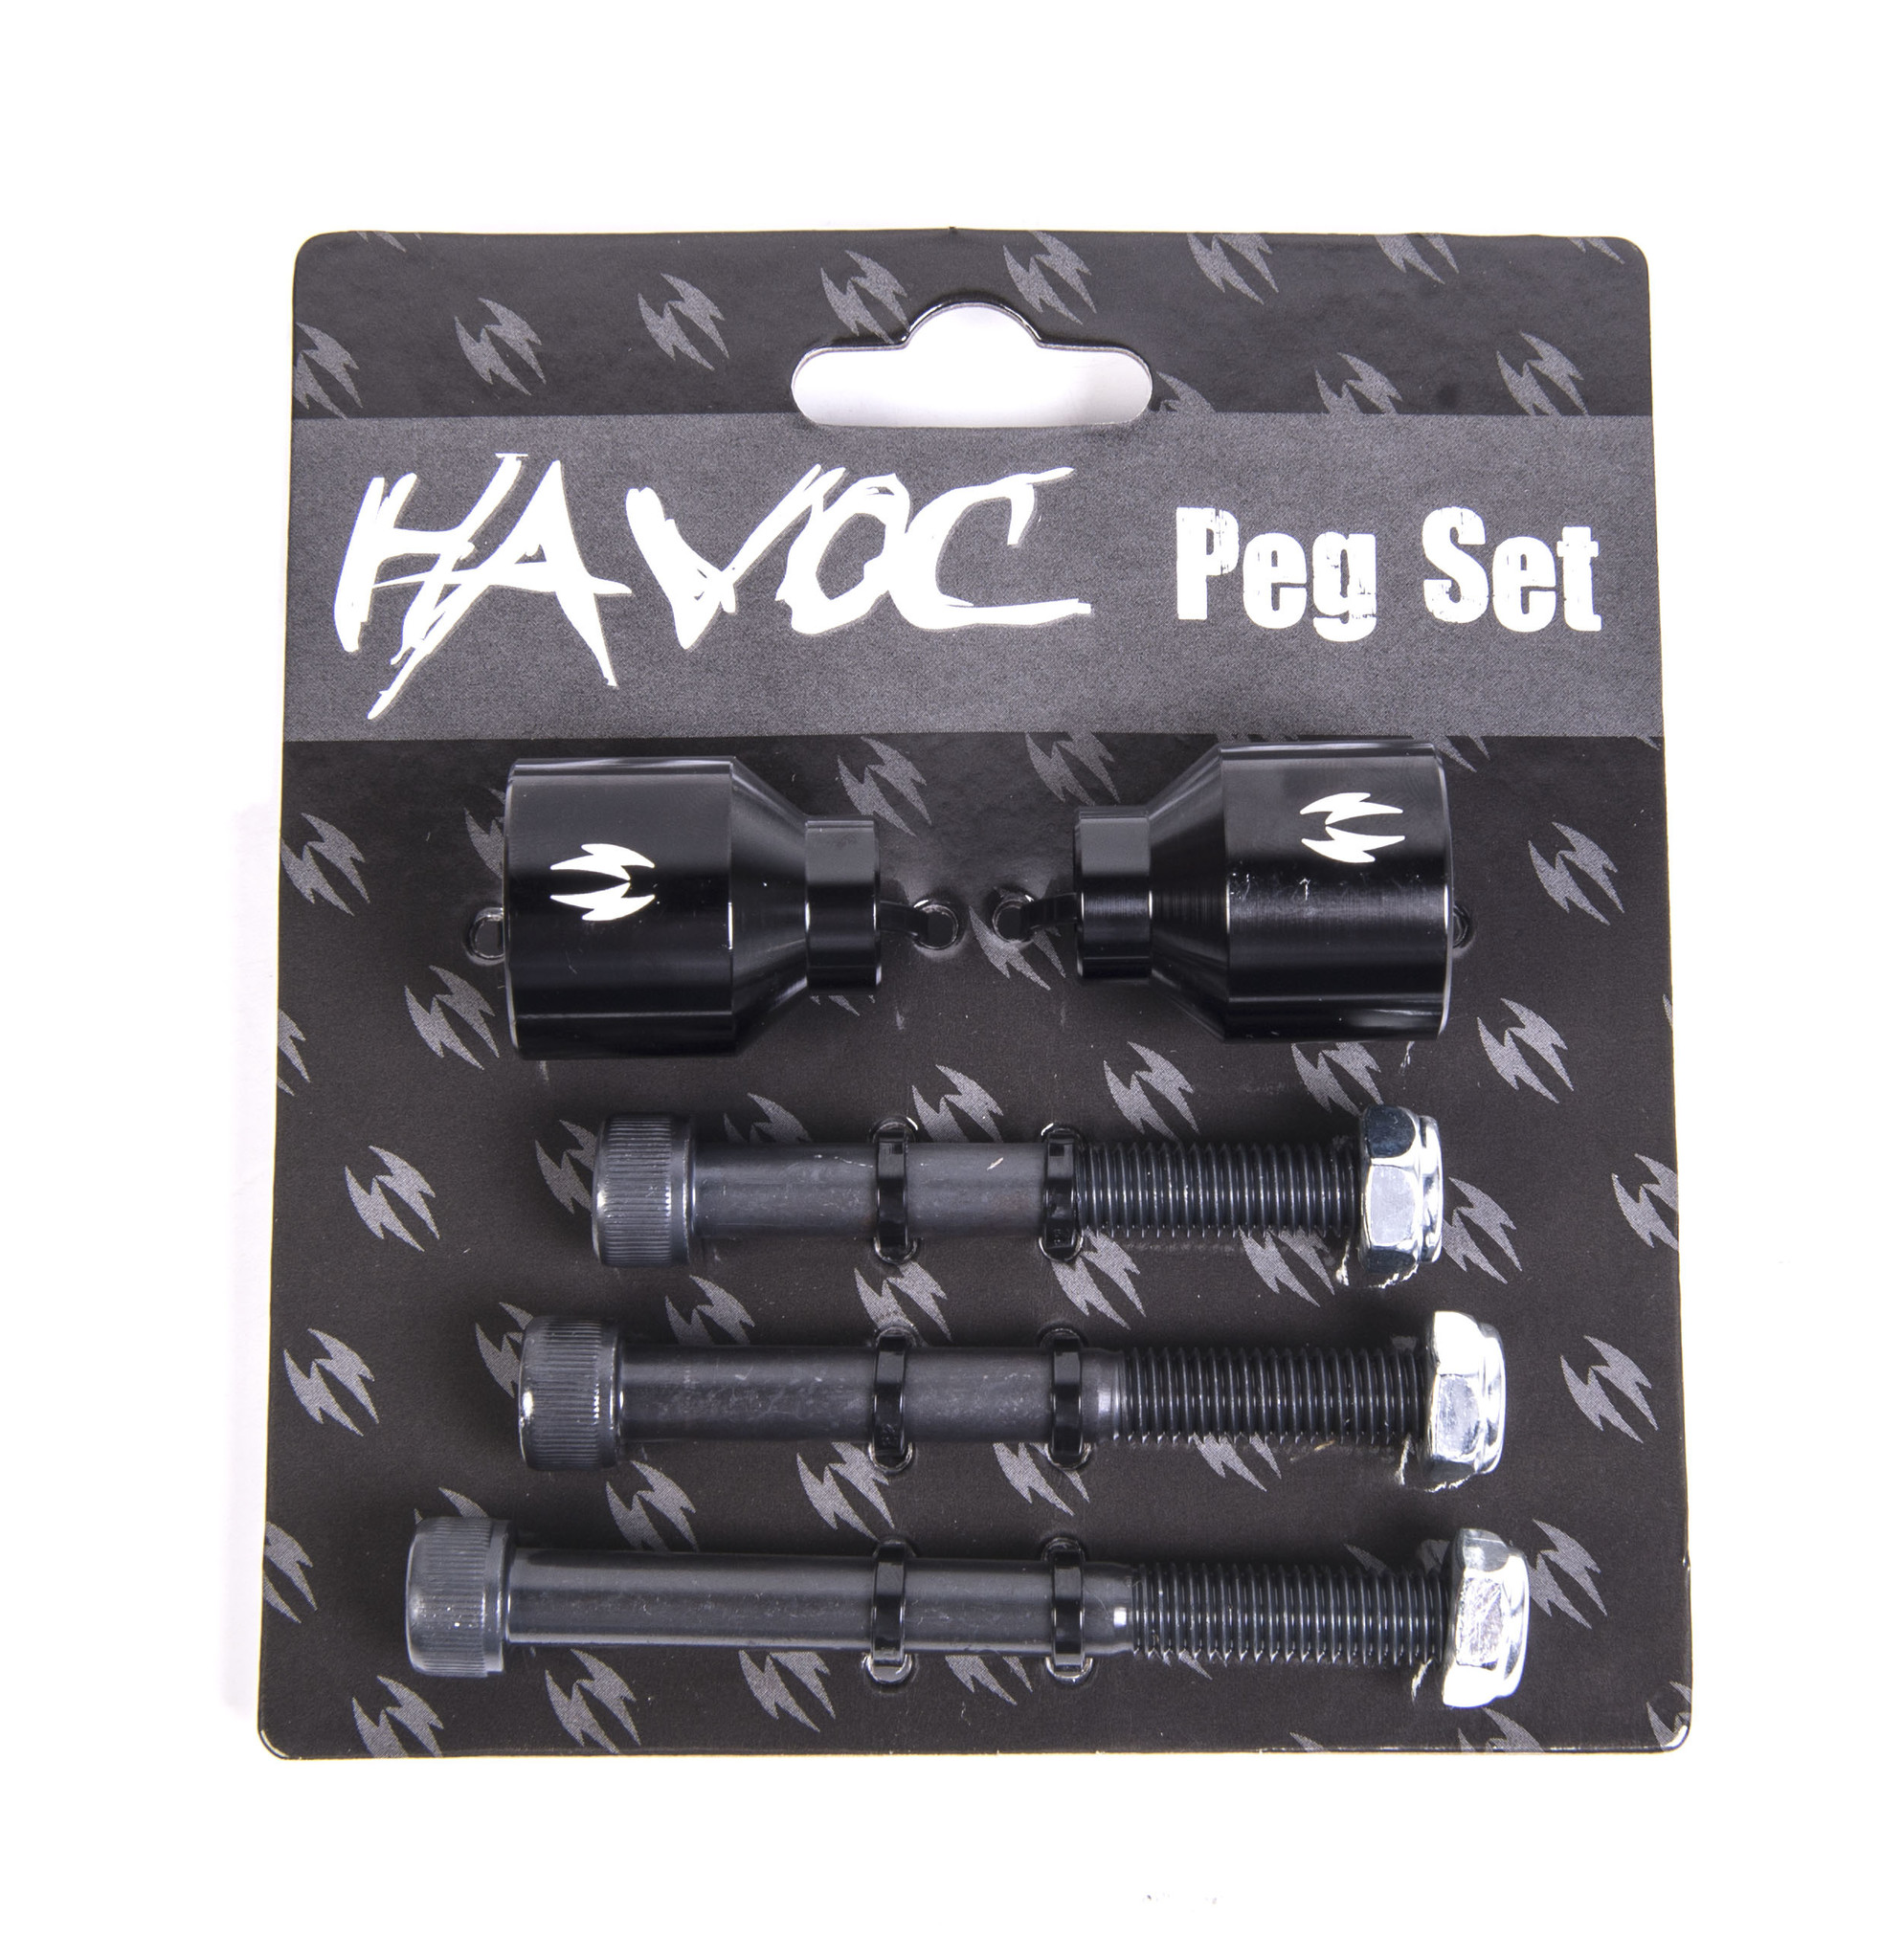 HAVOC PEG SET - BLACK